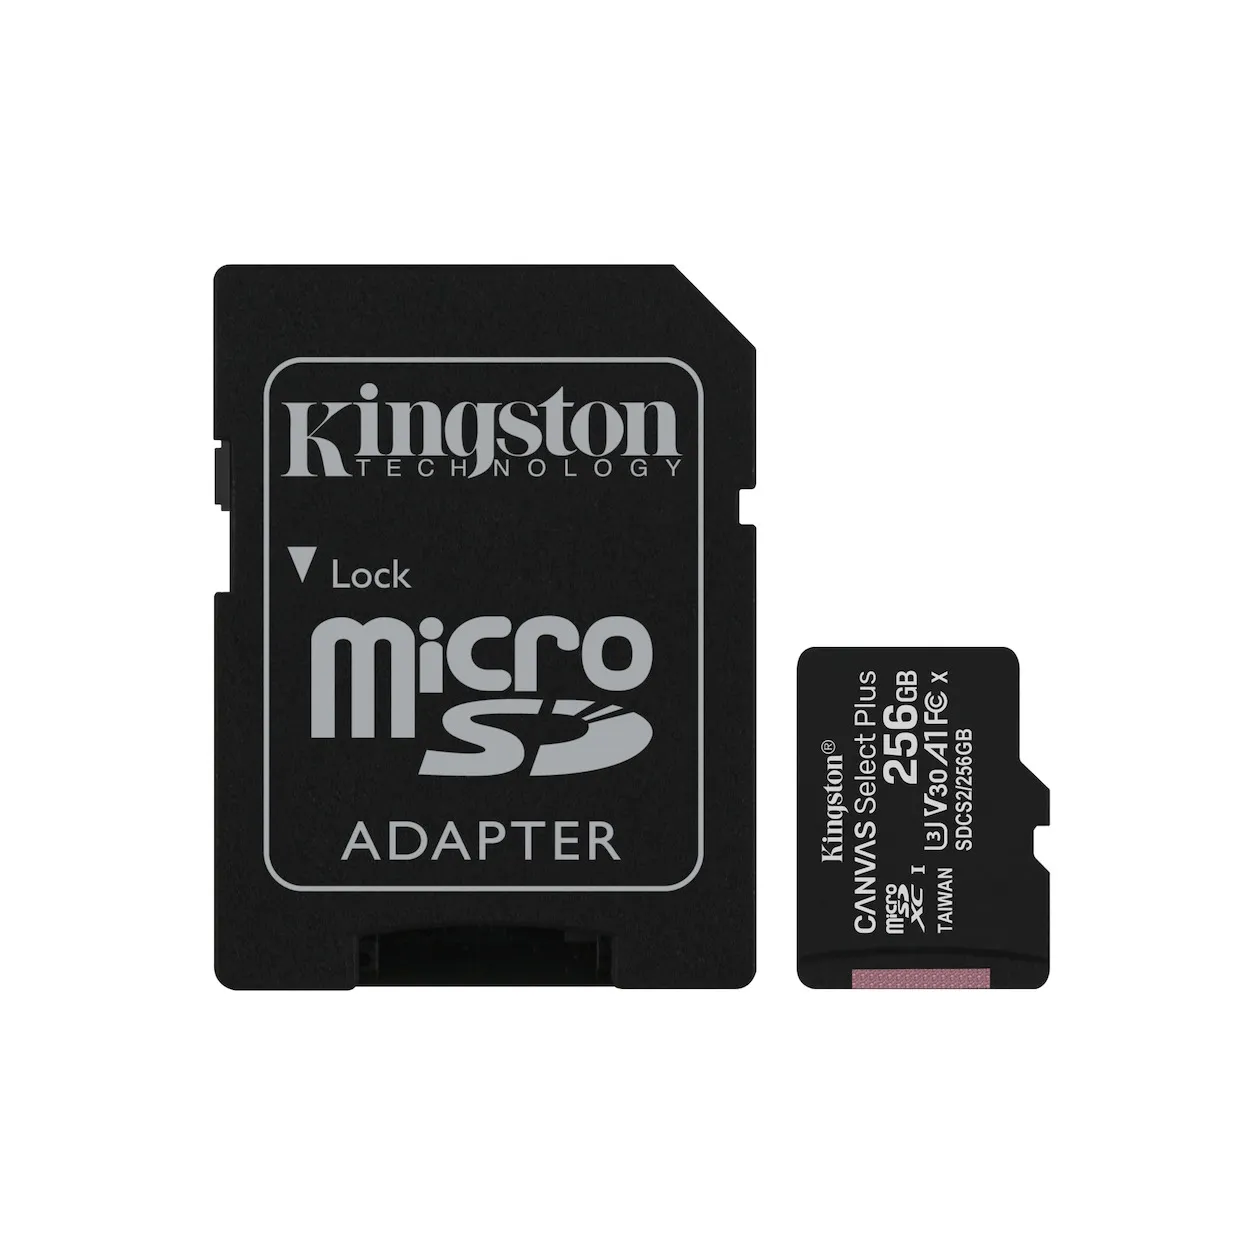 Kingston Canvas Select Plus microSDXC 256GB